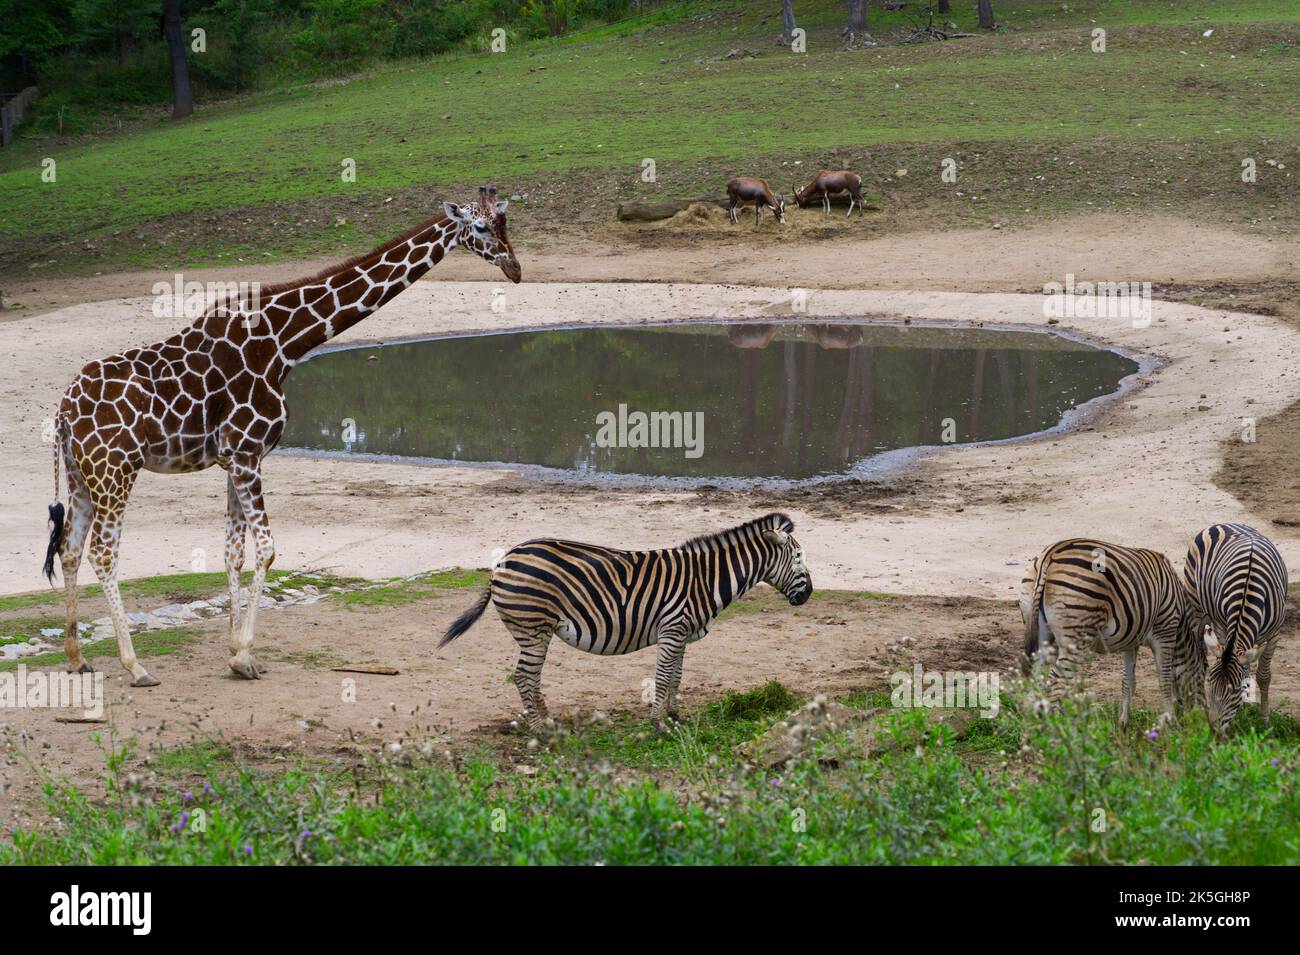 Giraffe and zebra at waterhole in Africa peaceful scene Stock Photo